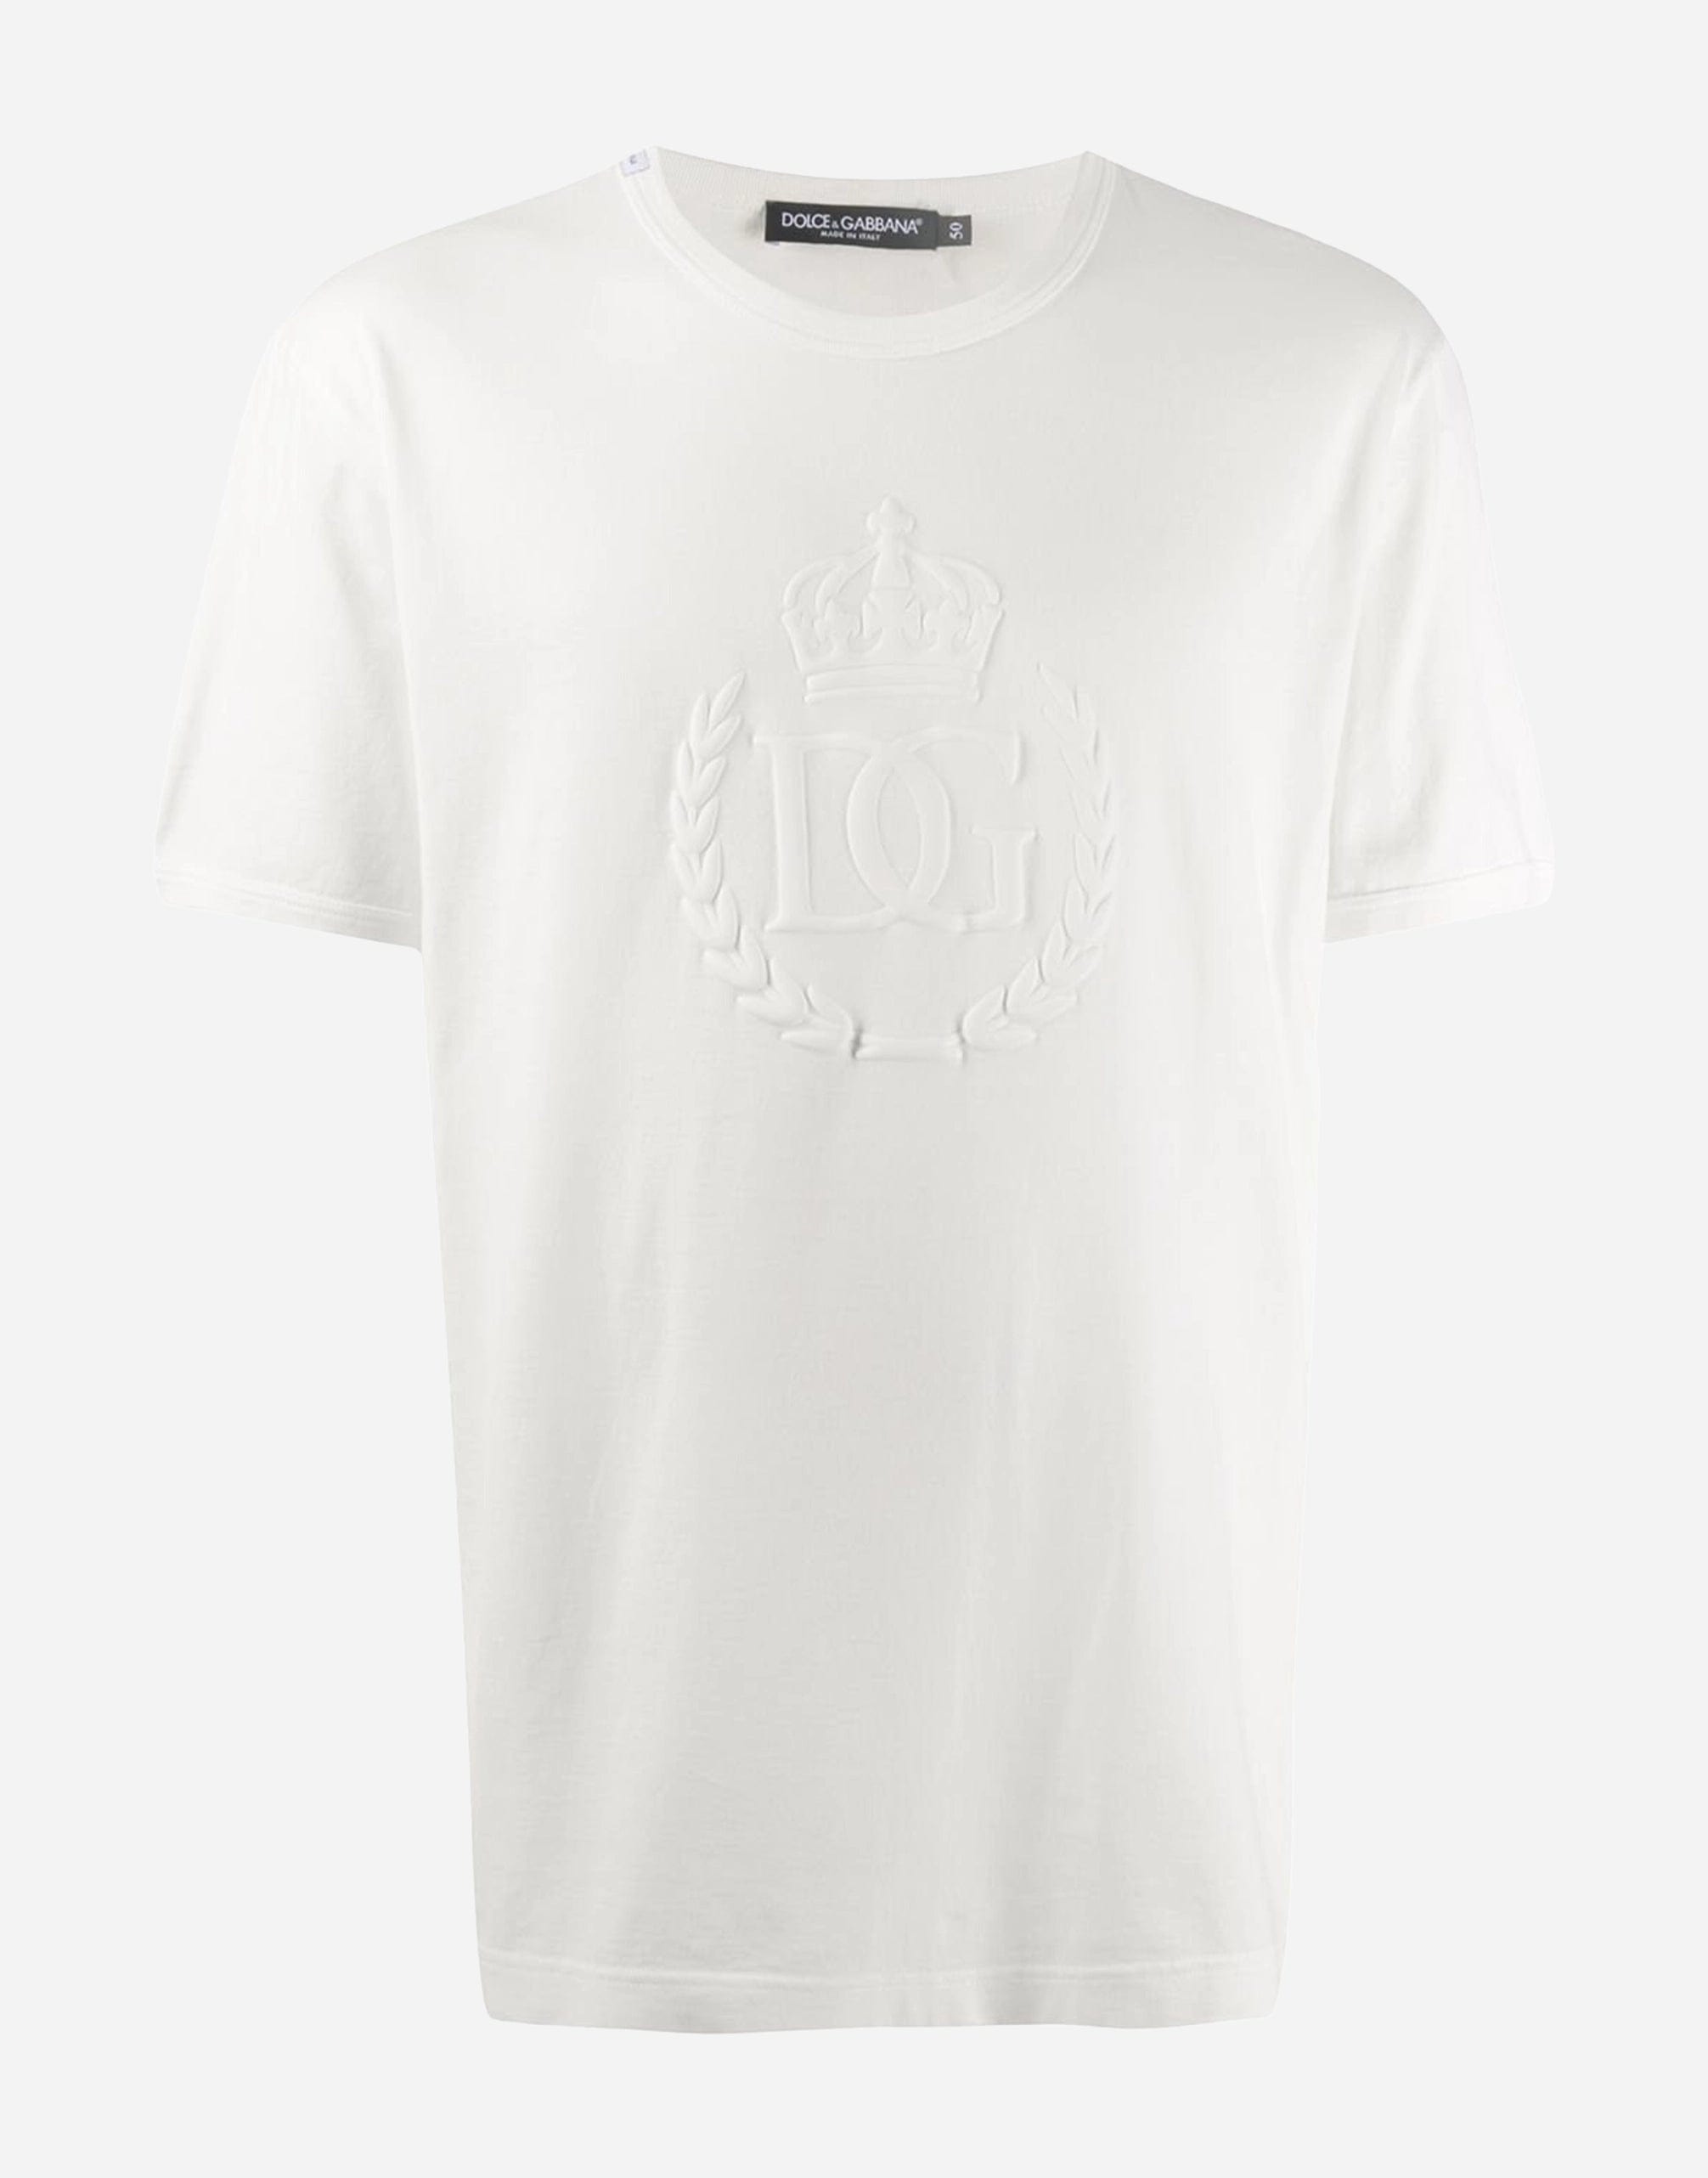 Dolce & Gabbana Large DG Crest T-Shirt